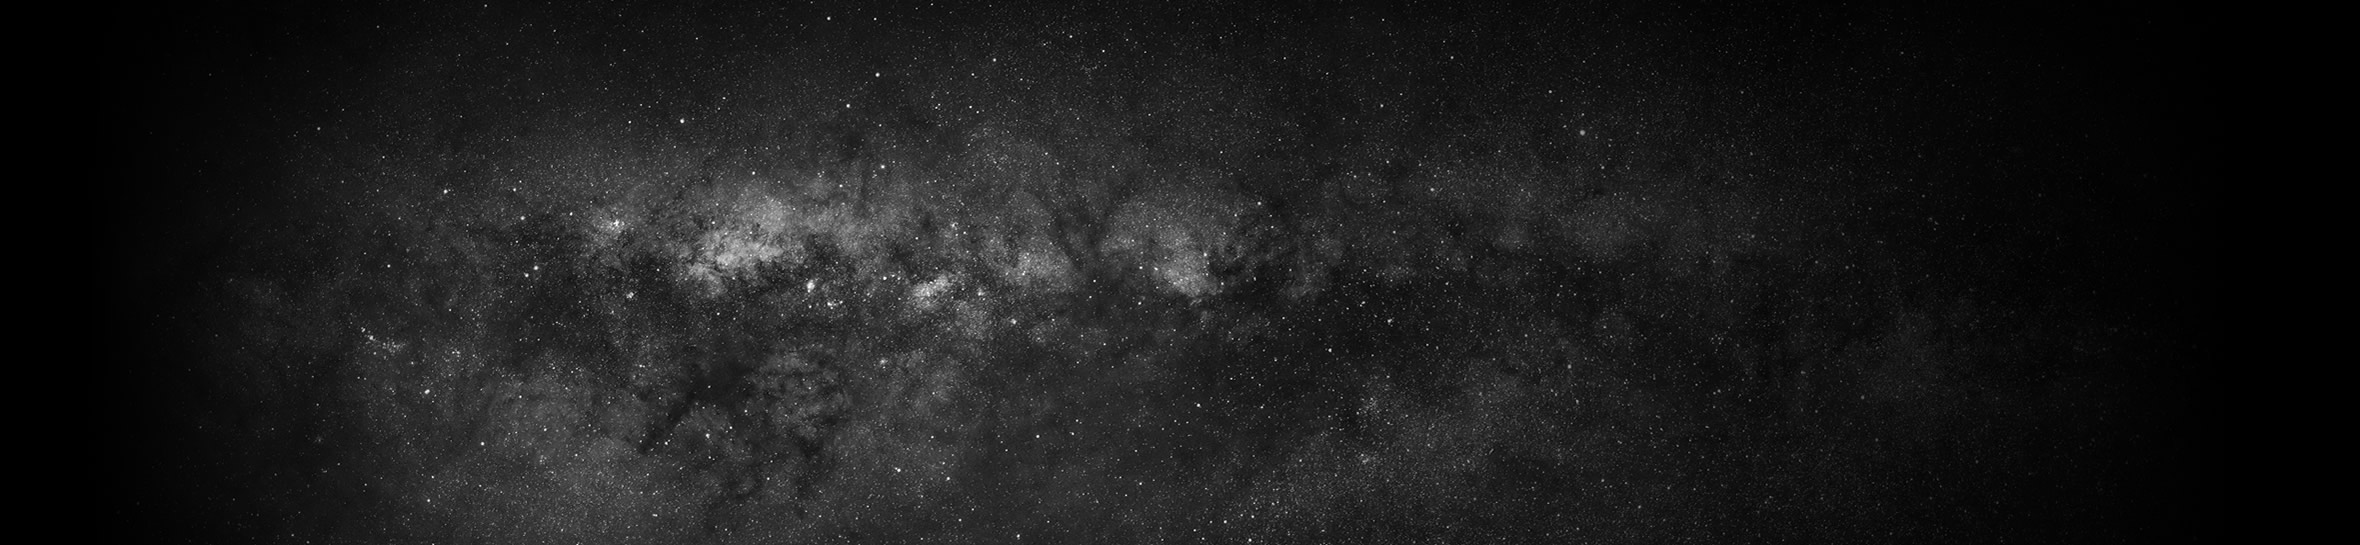 Display - Background - Milky Way